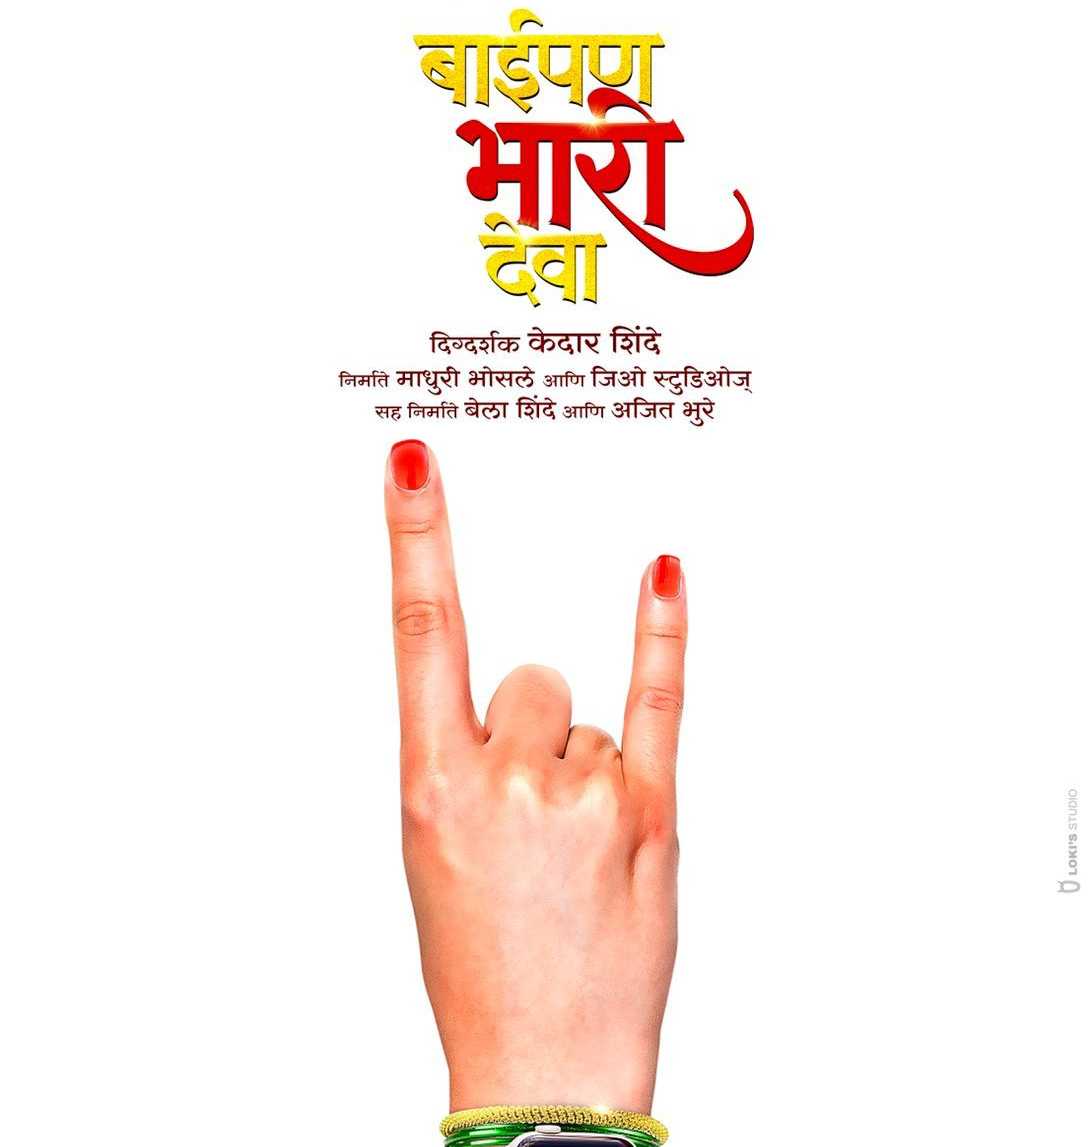 Director Kedar Shinde's Upcoming Marathi film 'Baipan Bhaari Deva!' Announced